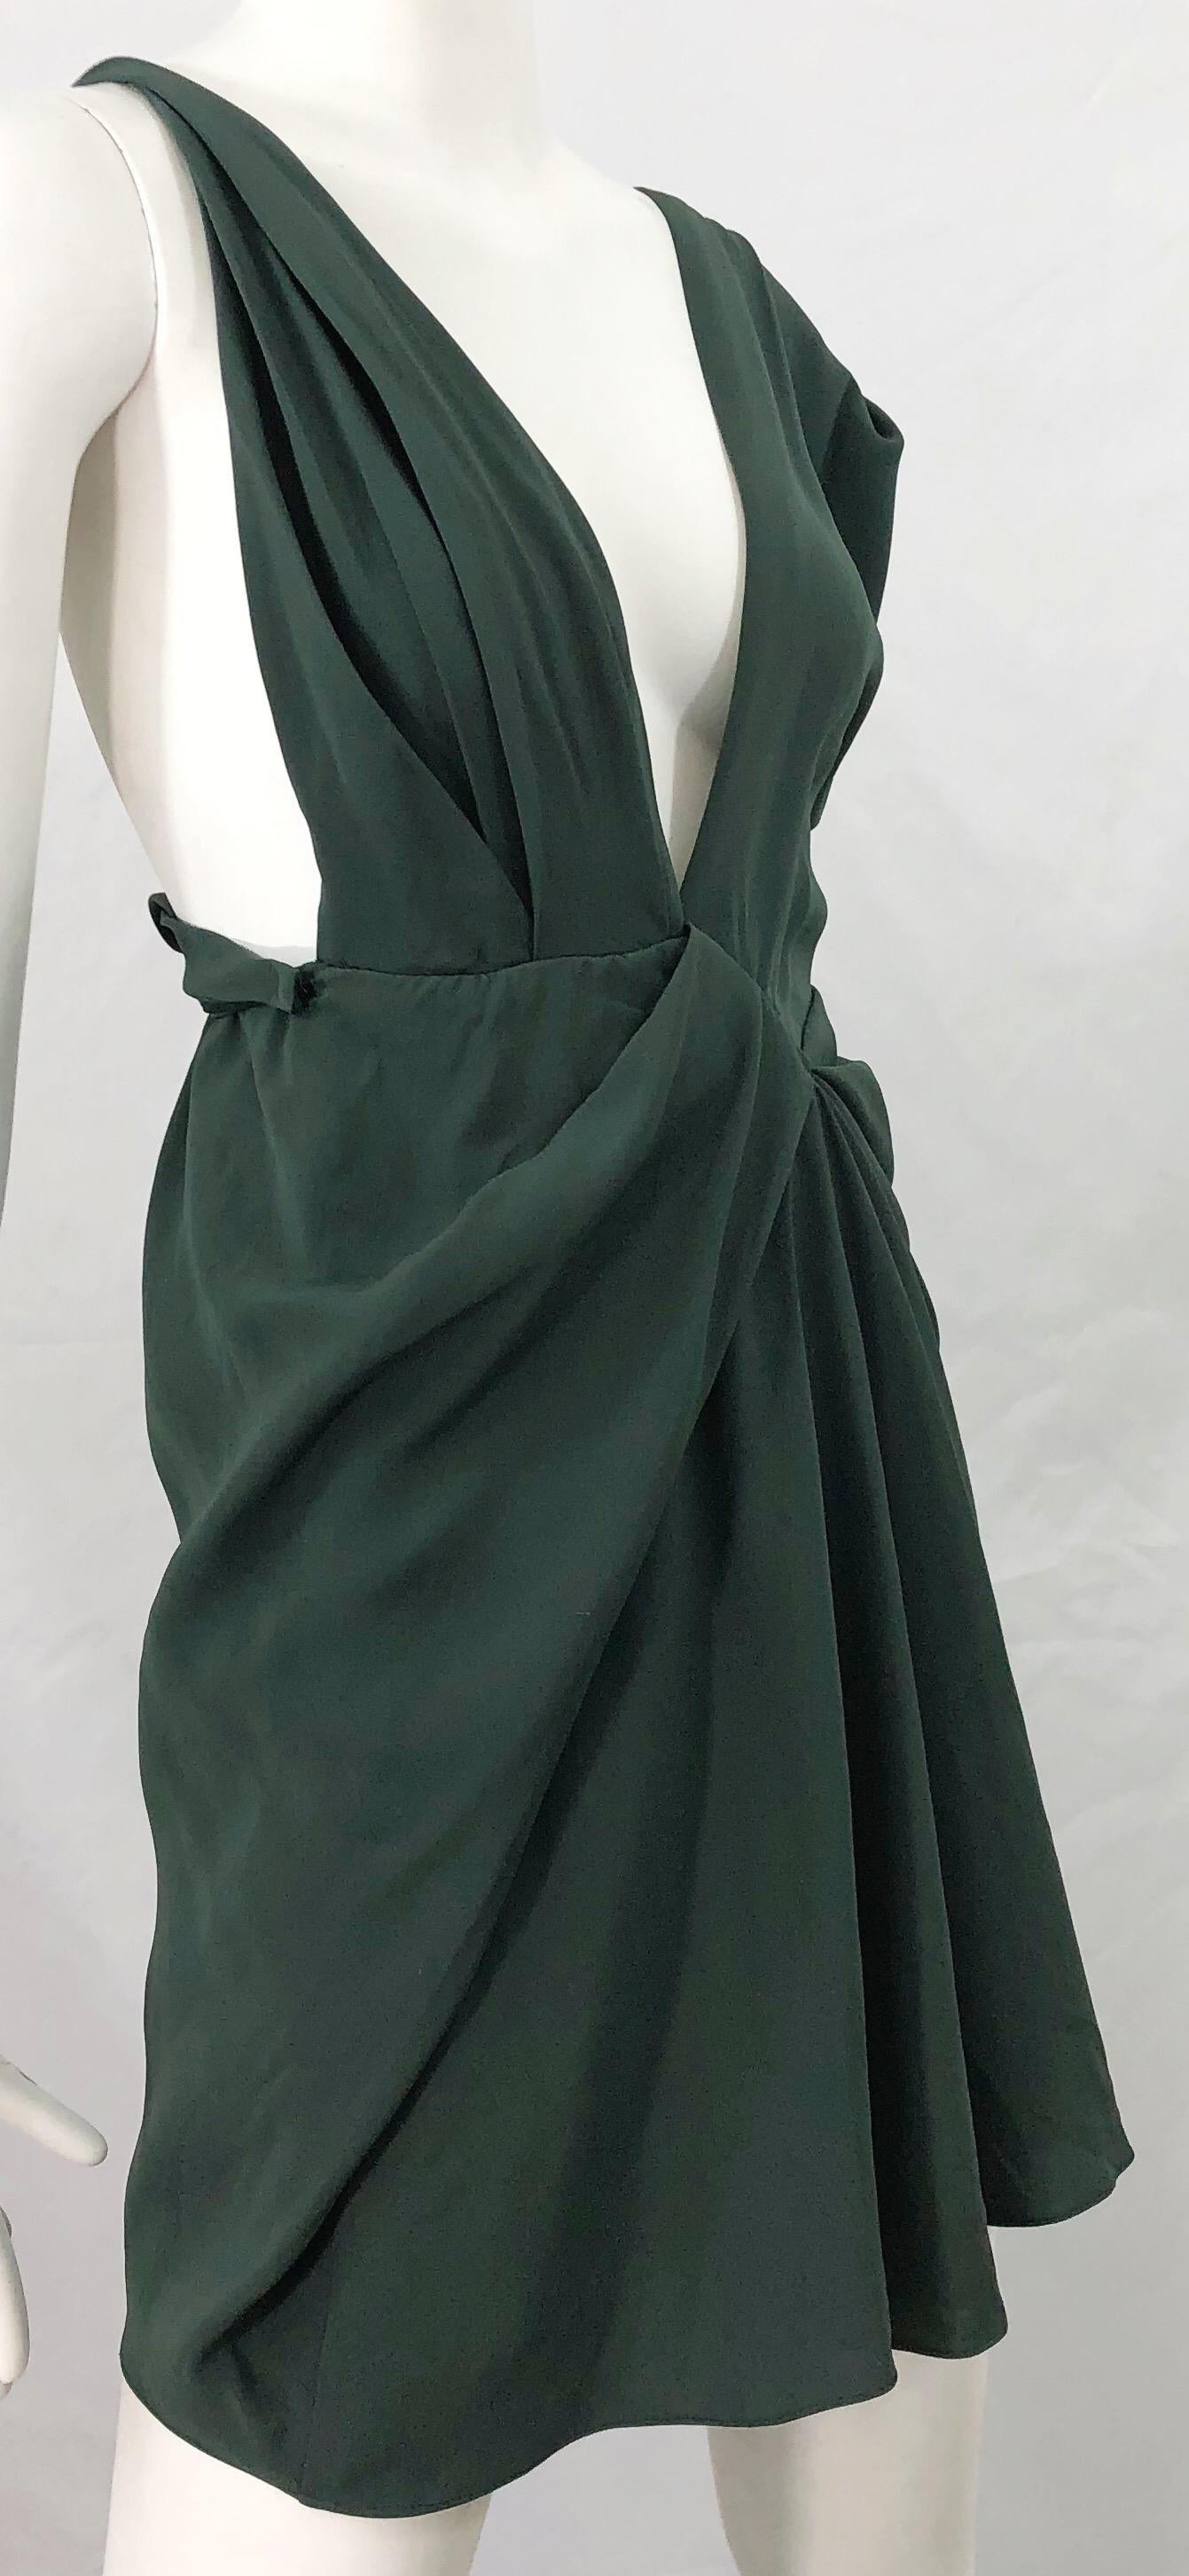 forest green colour dress